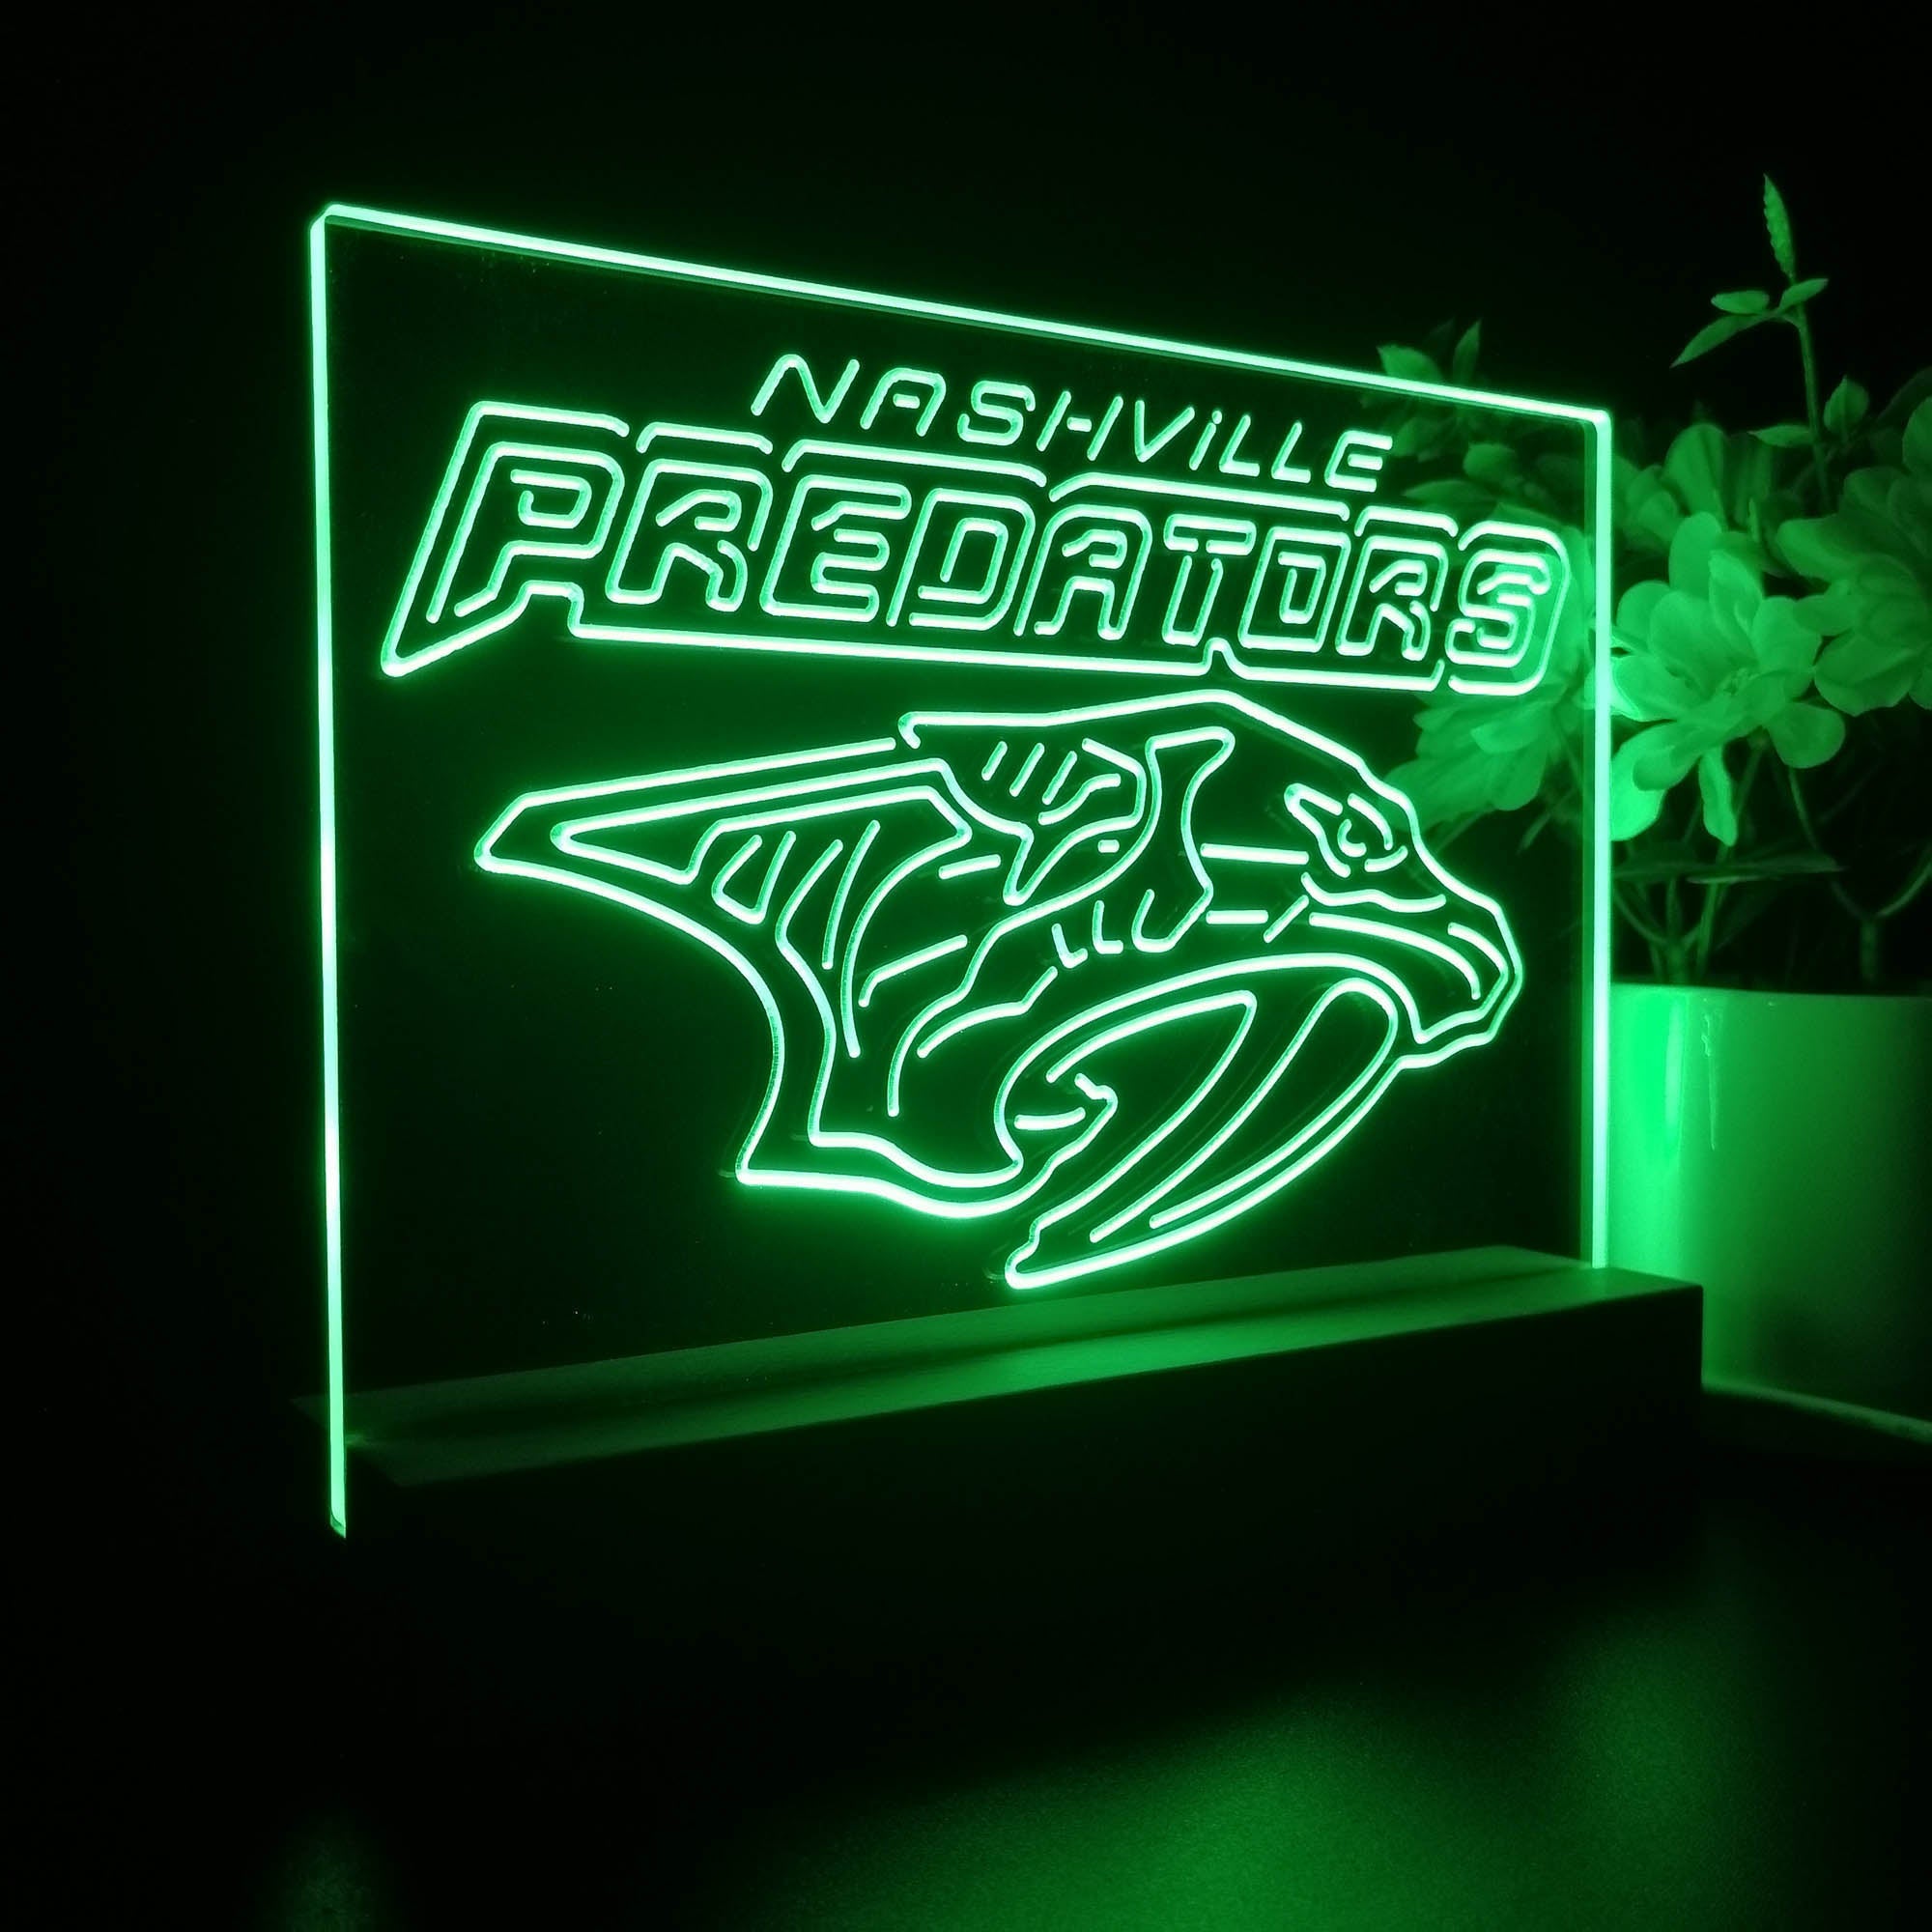 Nashville Predators Night Light LED Sign